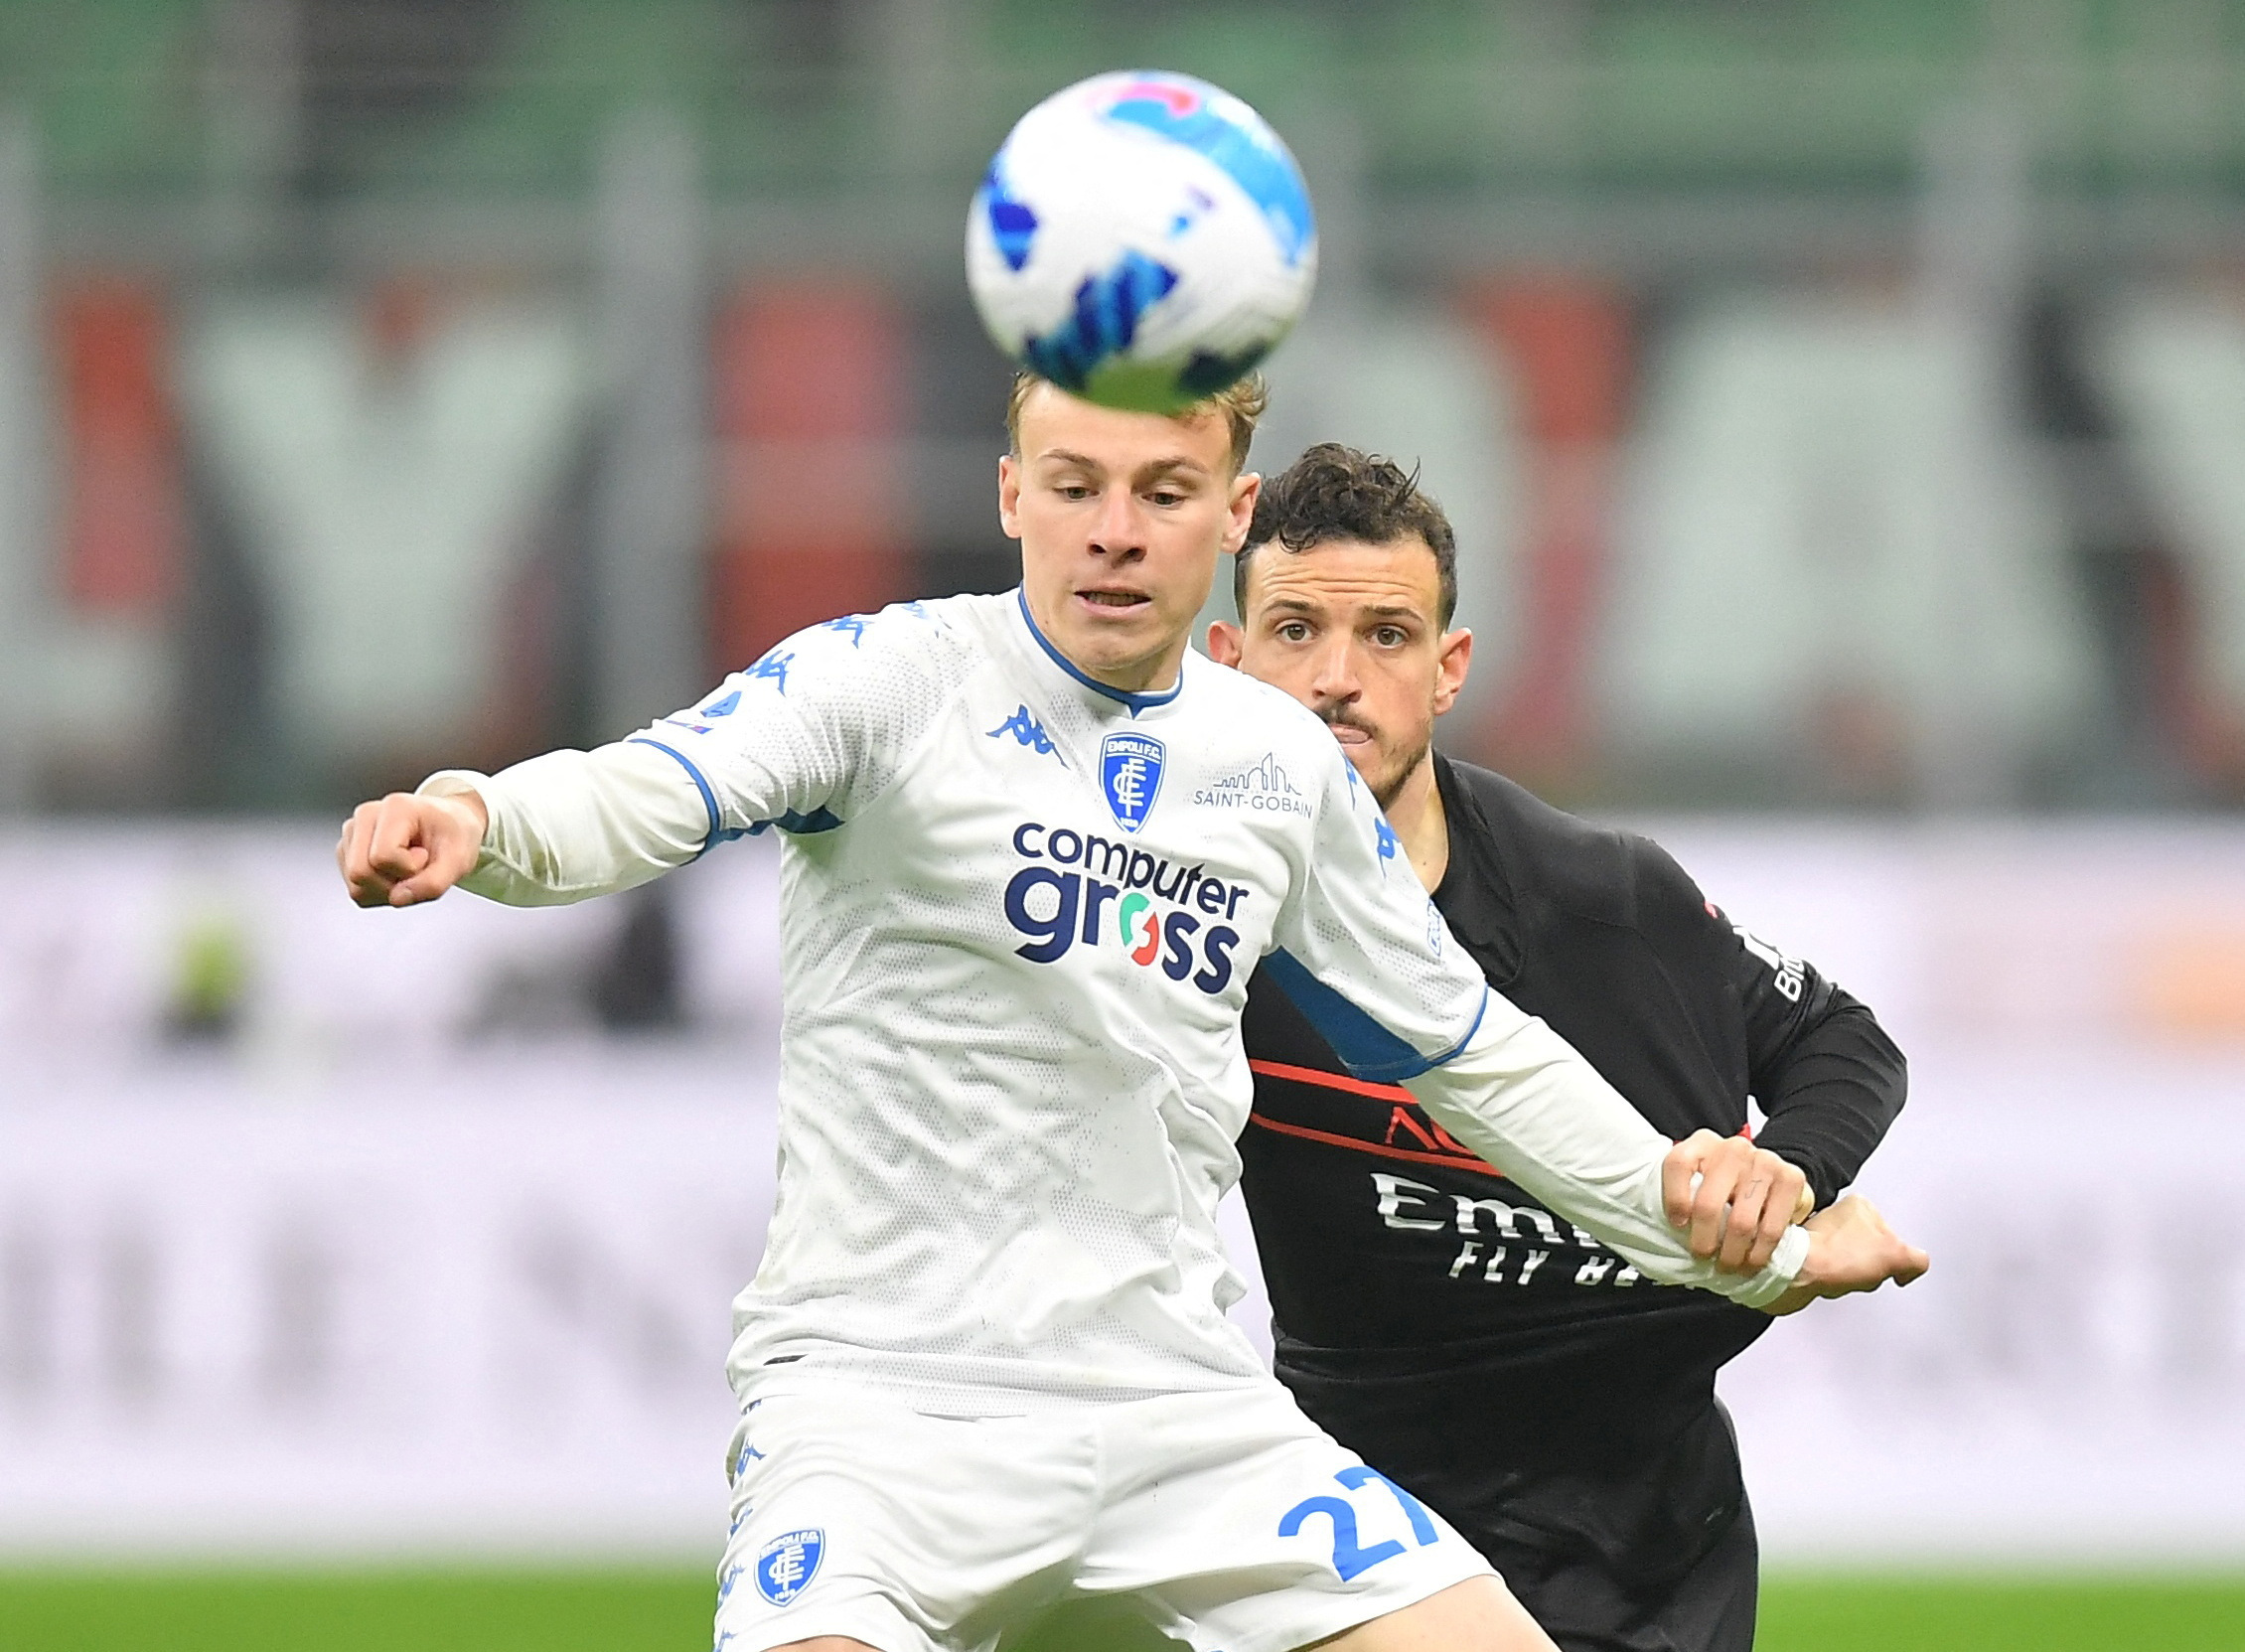 Spezia sign Poland midfielder Zurkowski on loan from Fiorentina | Reuters